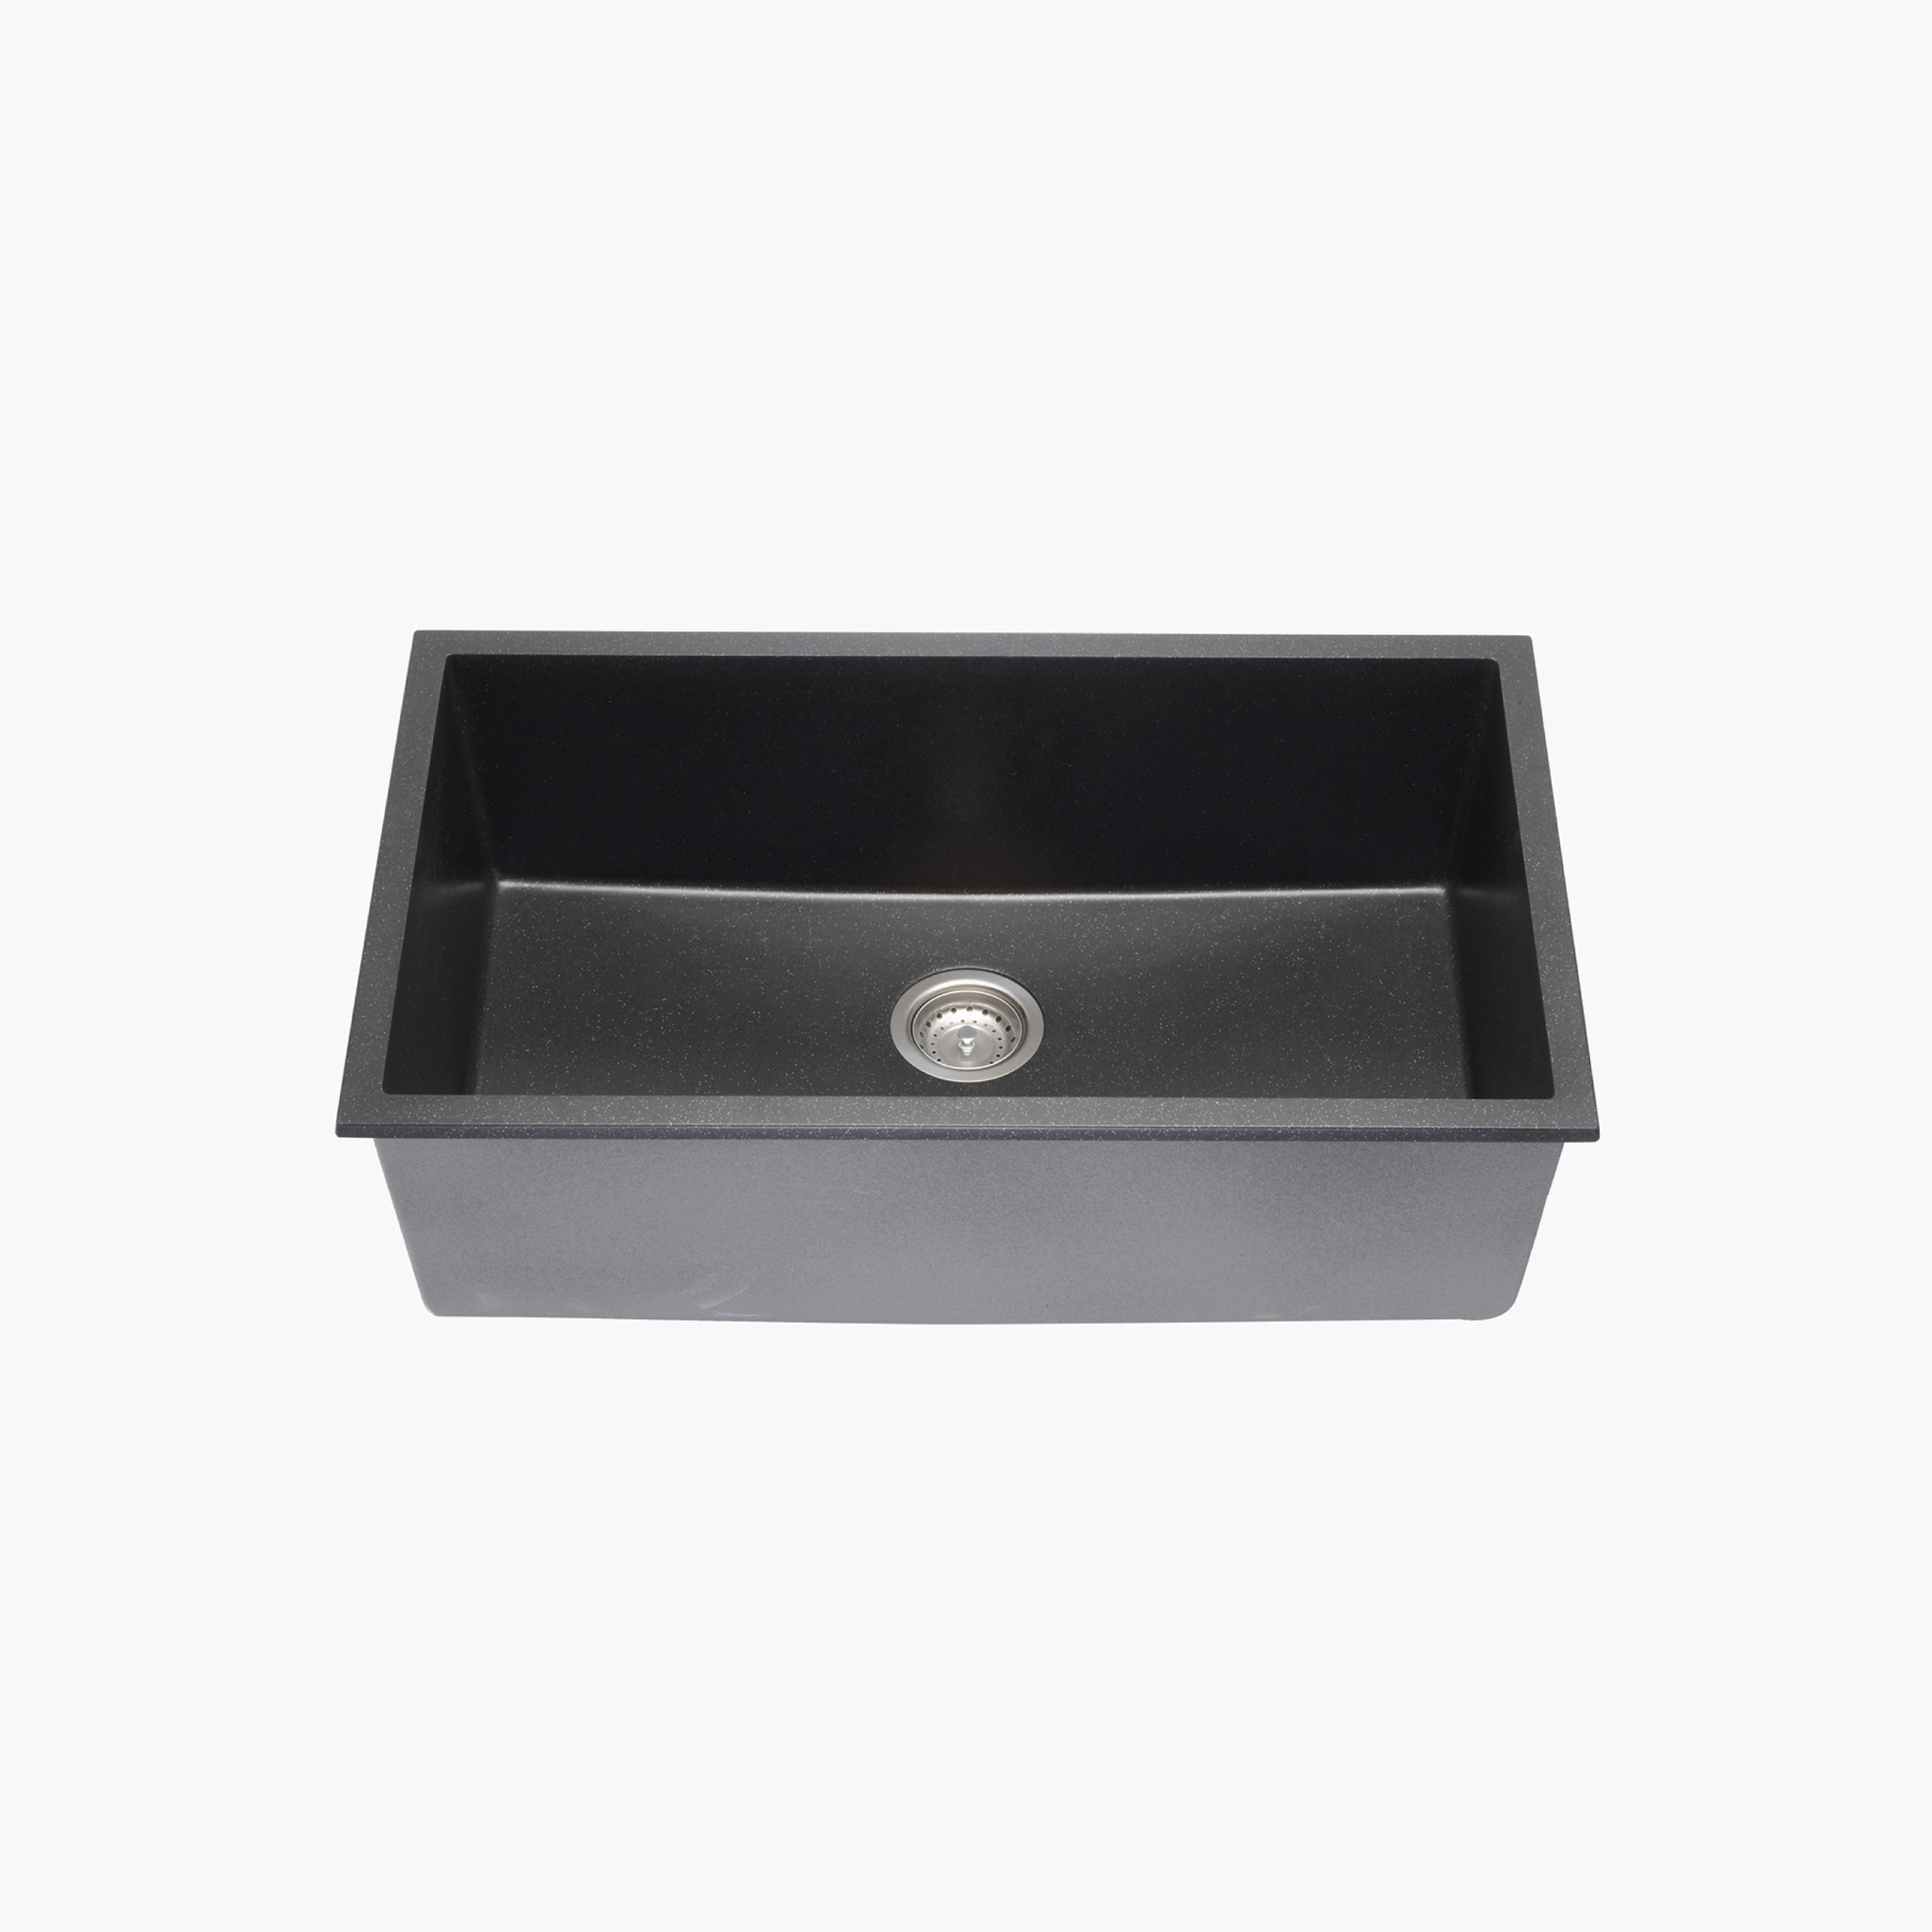 KBFMORE™ 32" Granite Single Bowl Undermount Kitchen Sink